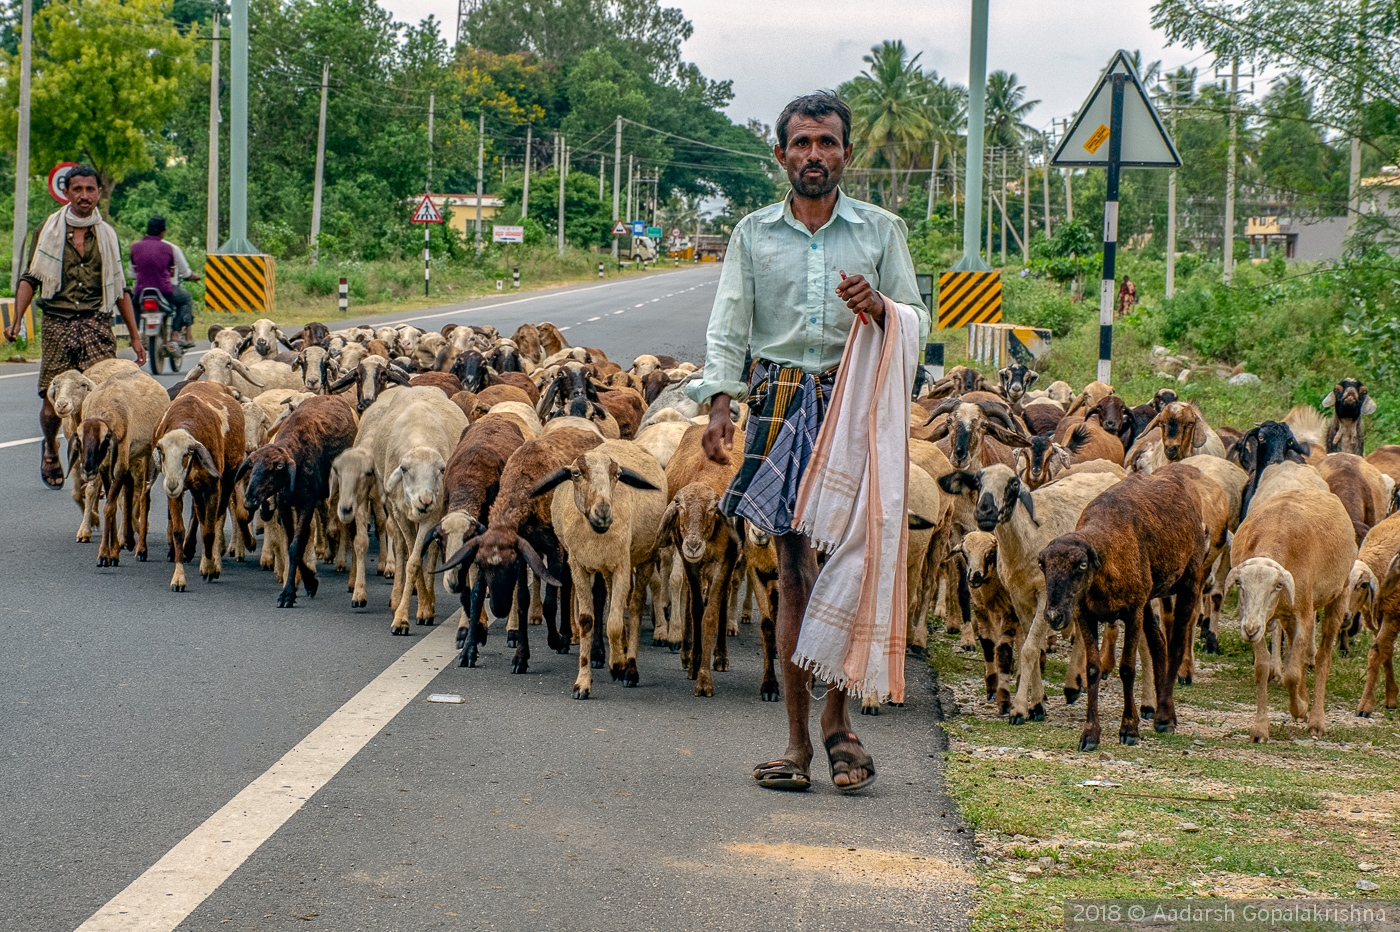 Shepherd with his Sheep cross the street - India by Aadarsh Gopalakrishna